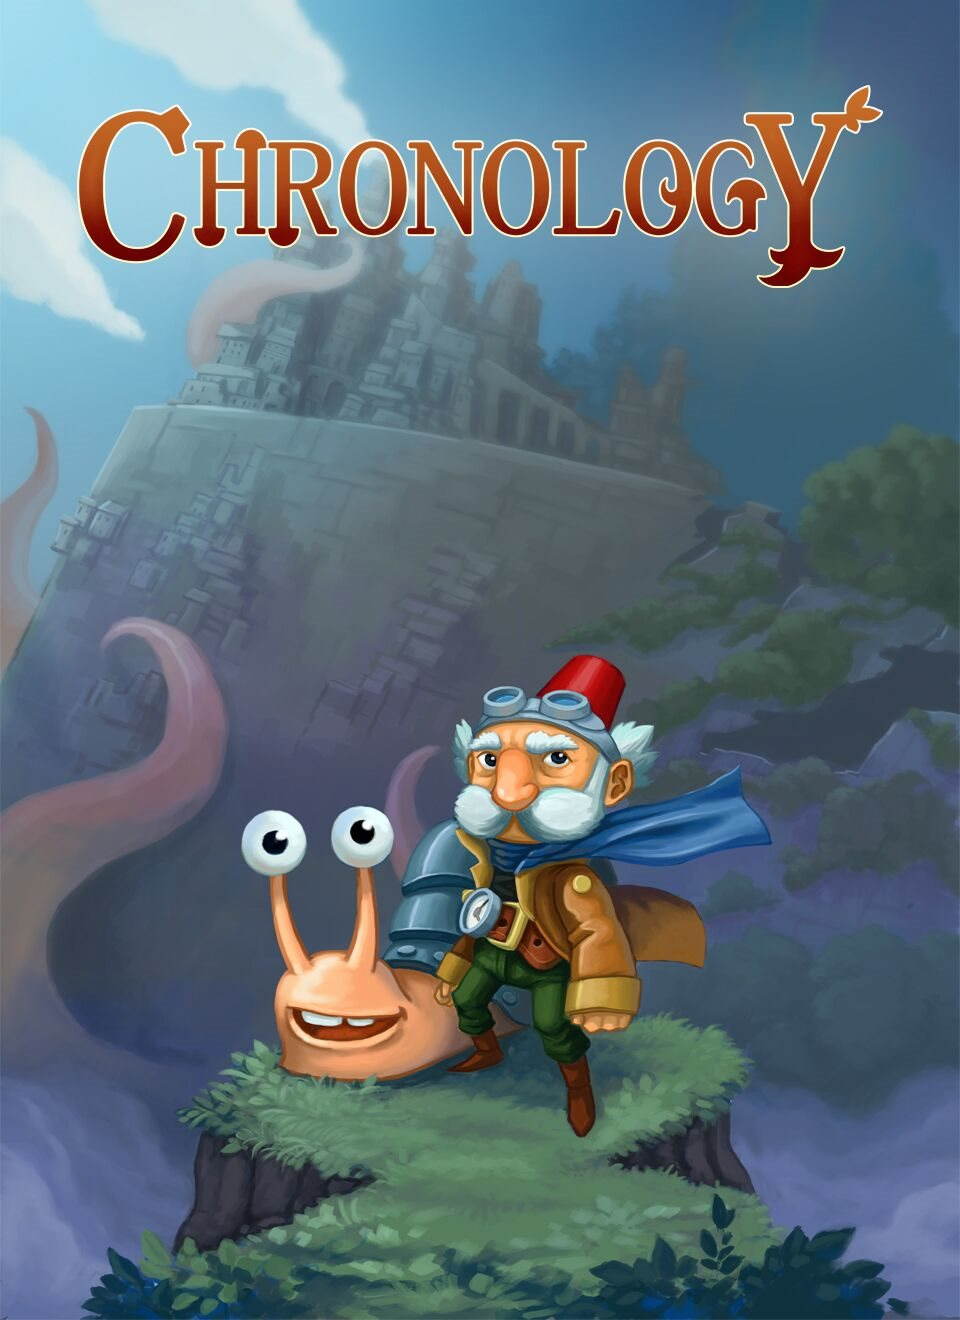 PC játék Chronology - PC DIGITAL